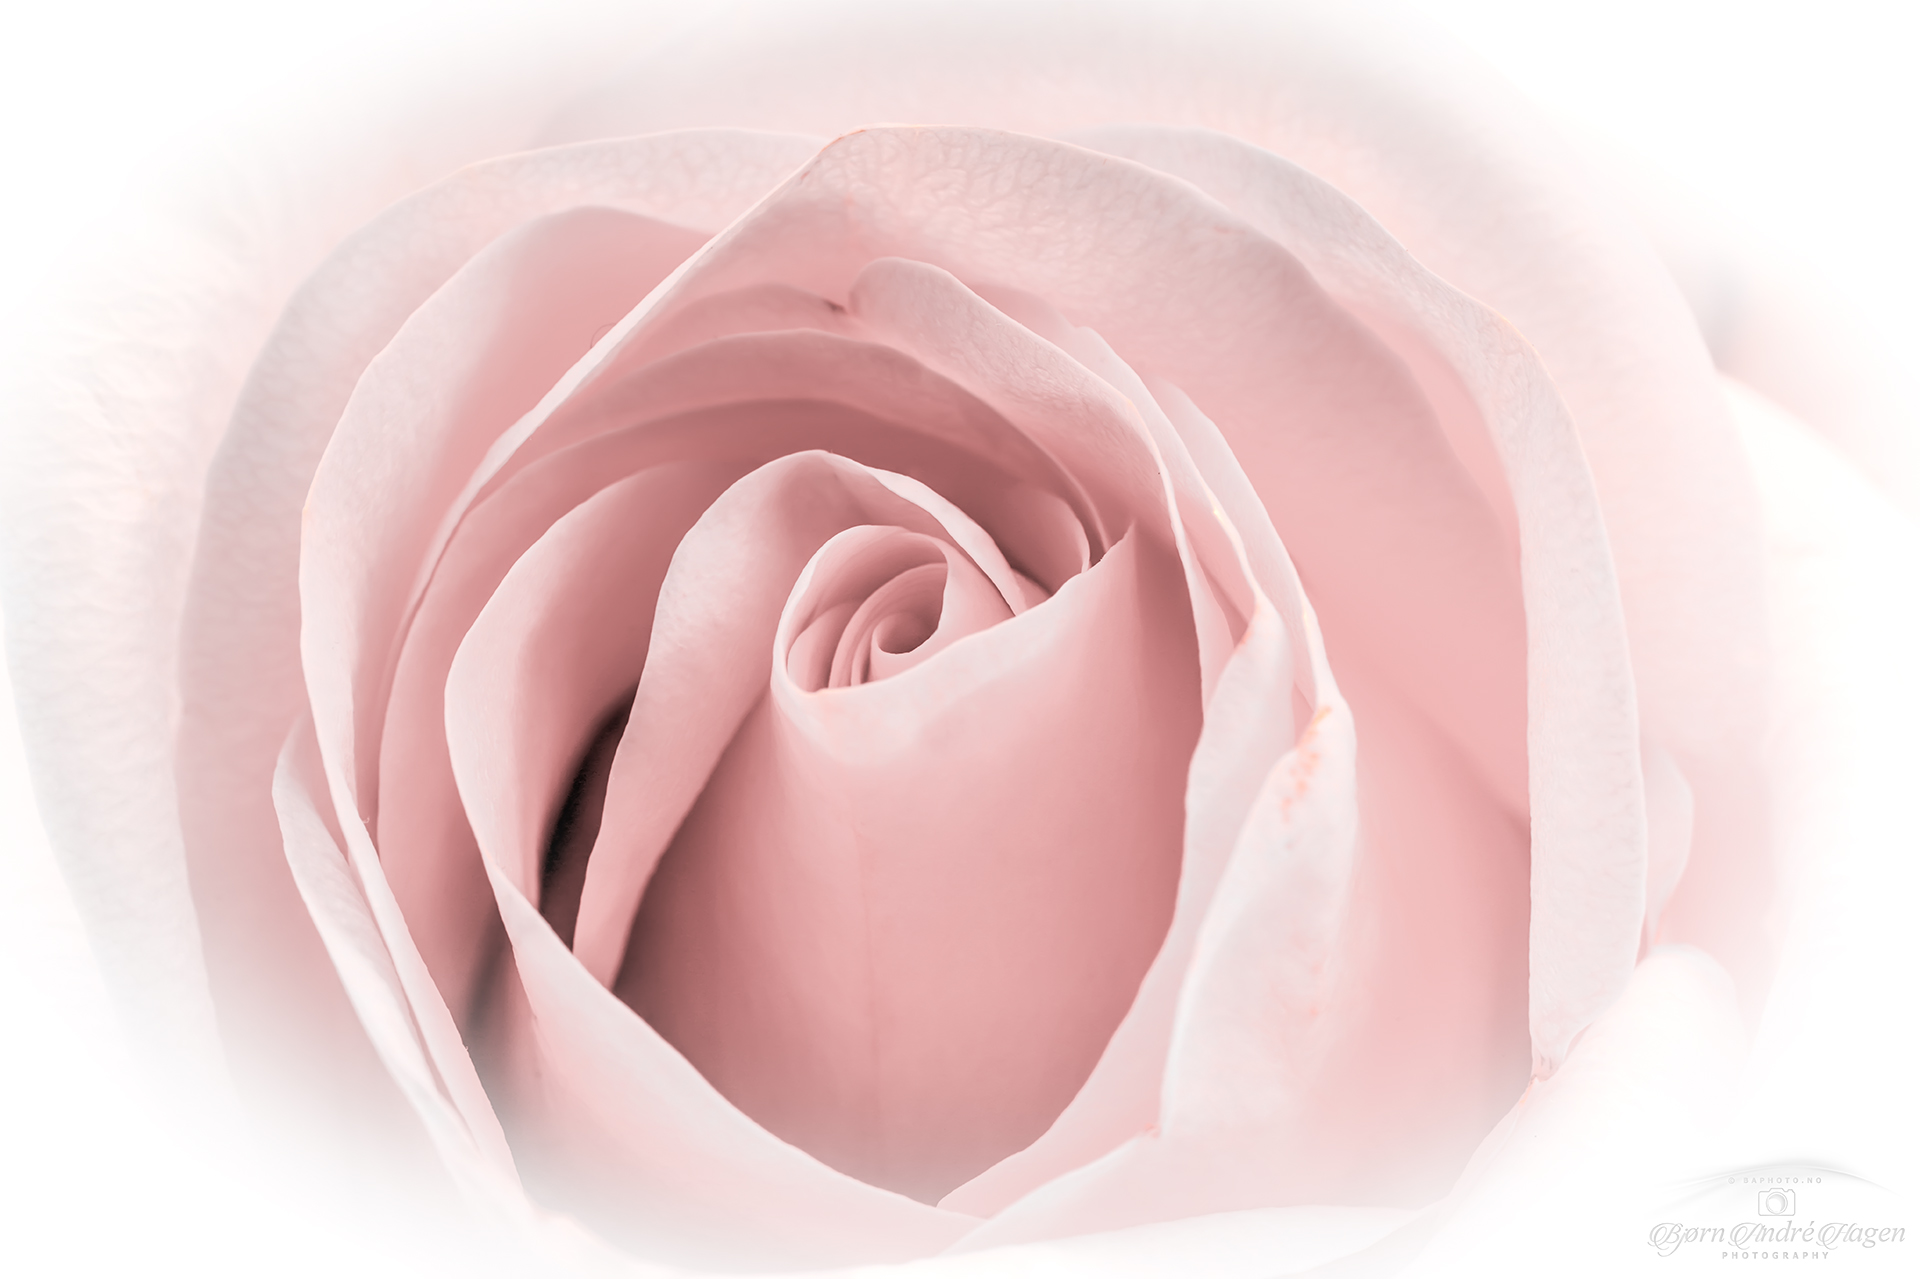 Soft Rose 1 2020